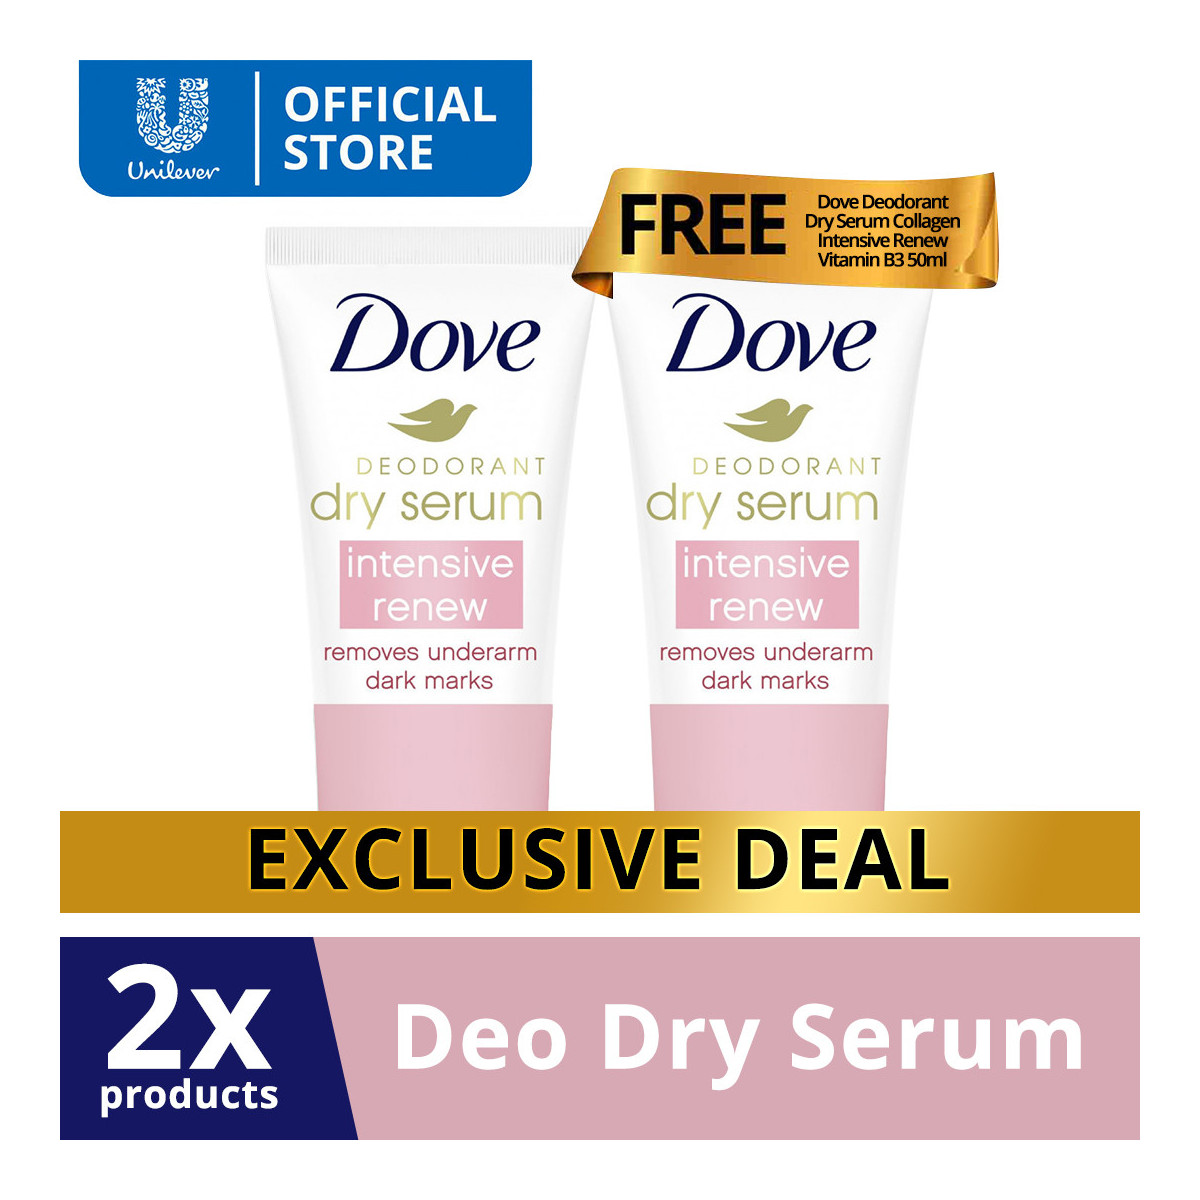 [BUY 1 TAKE 1] Dove Deodorant Dry Serum Collagen Intensive Renew Vitamin B3 50ML